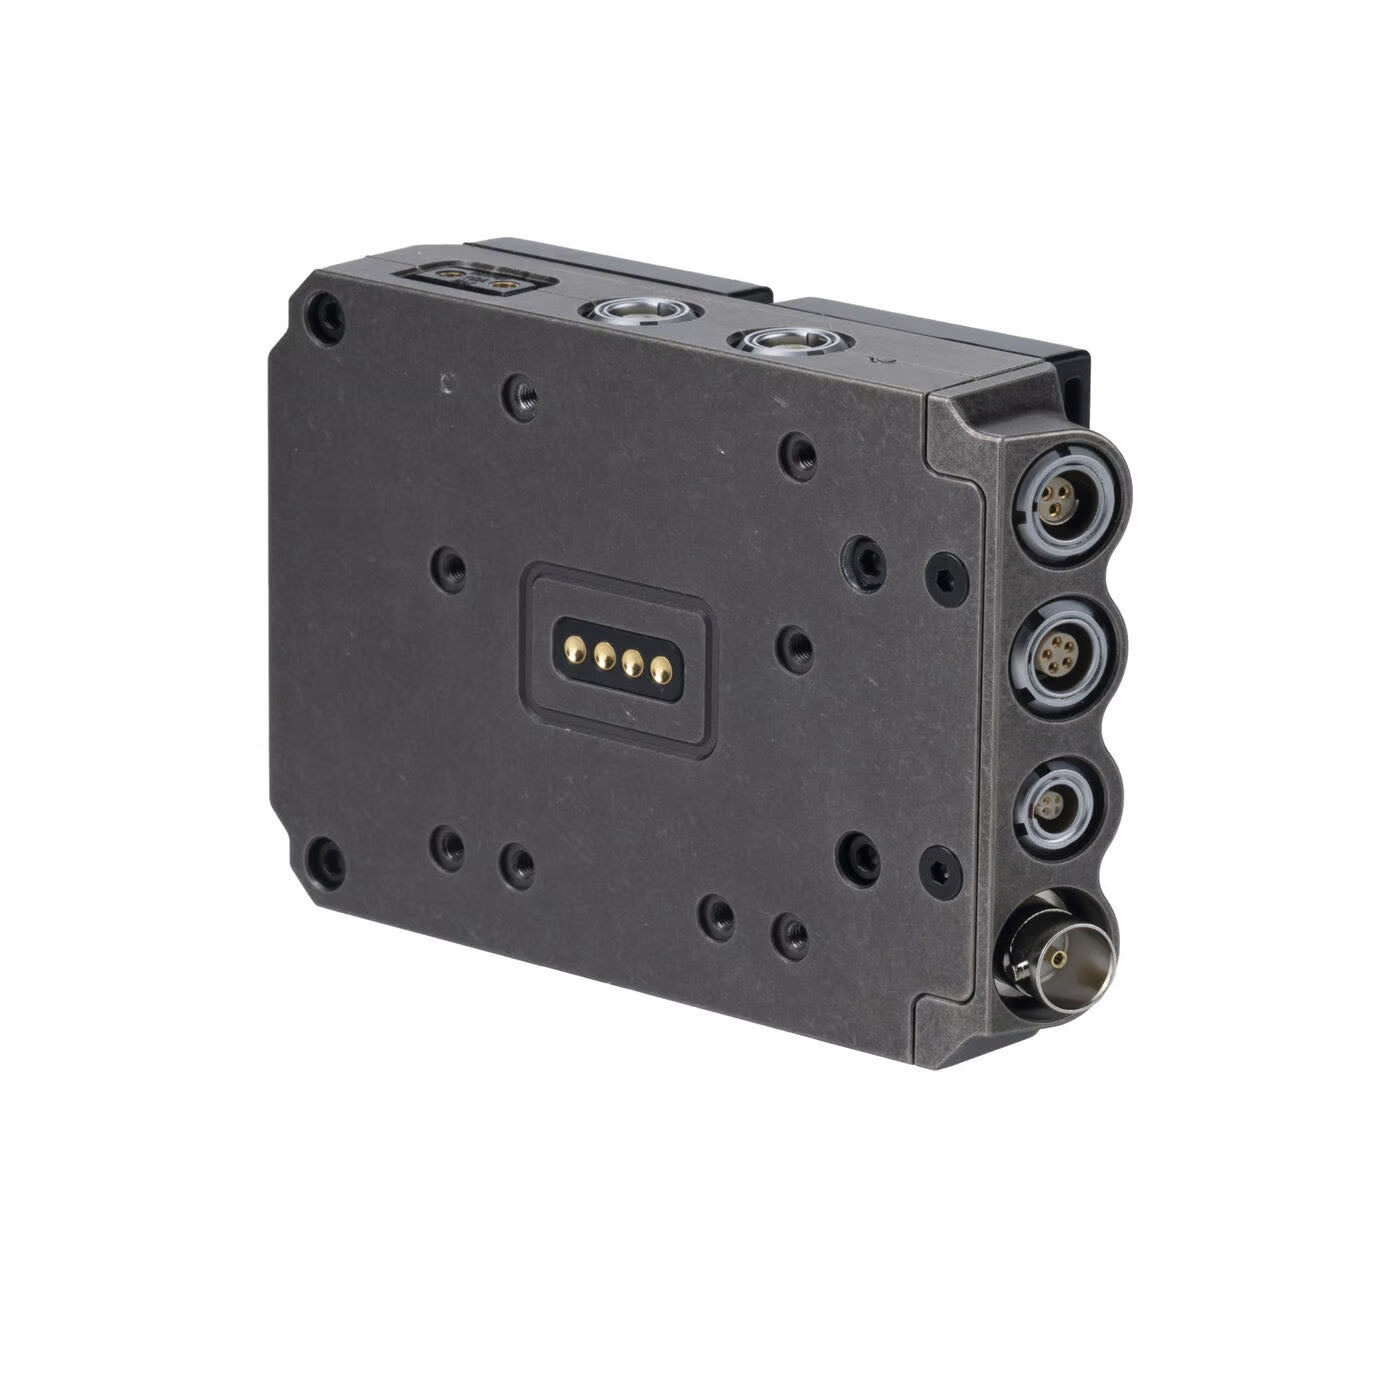 TILTA(ティルタ) Advanced Power Distribution Module for RED Komodo - Tactical Gray TA-T08-APM